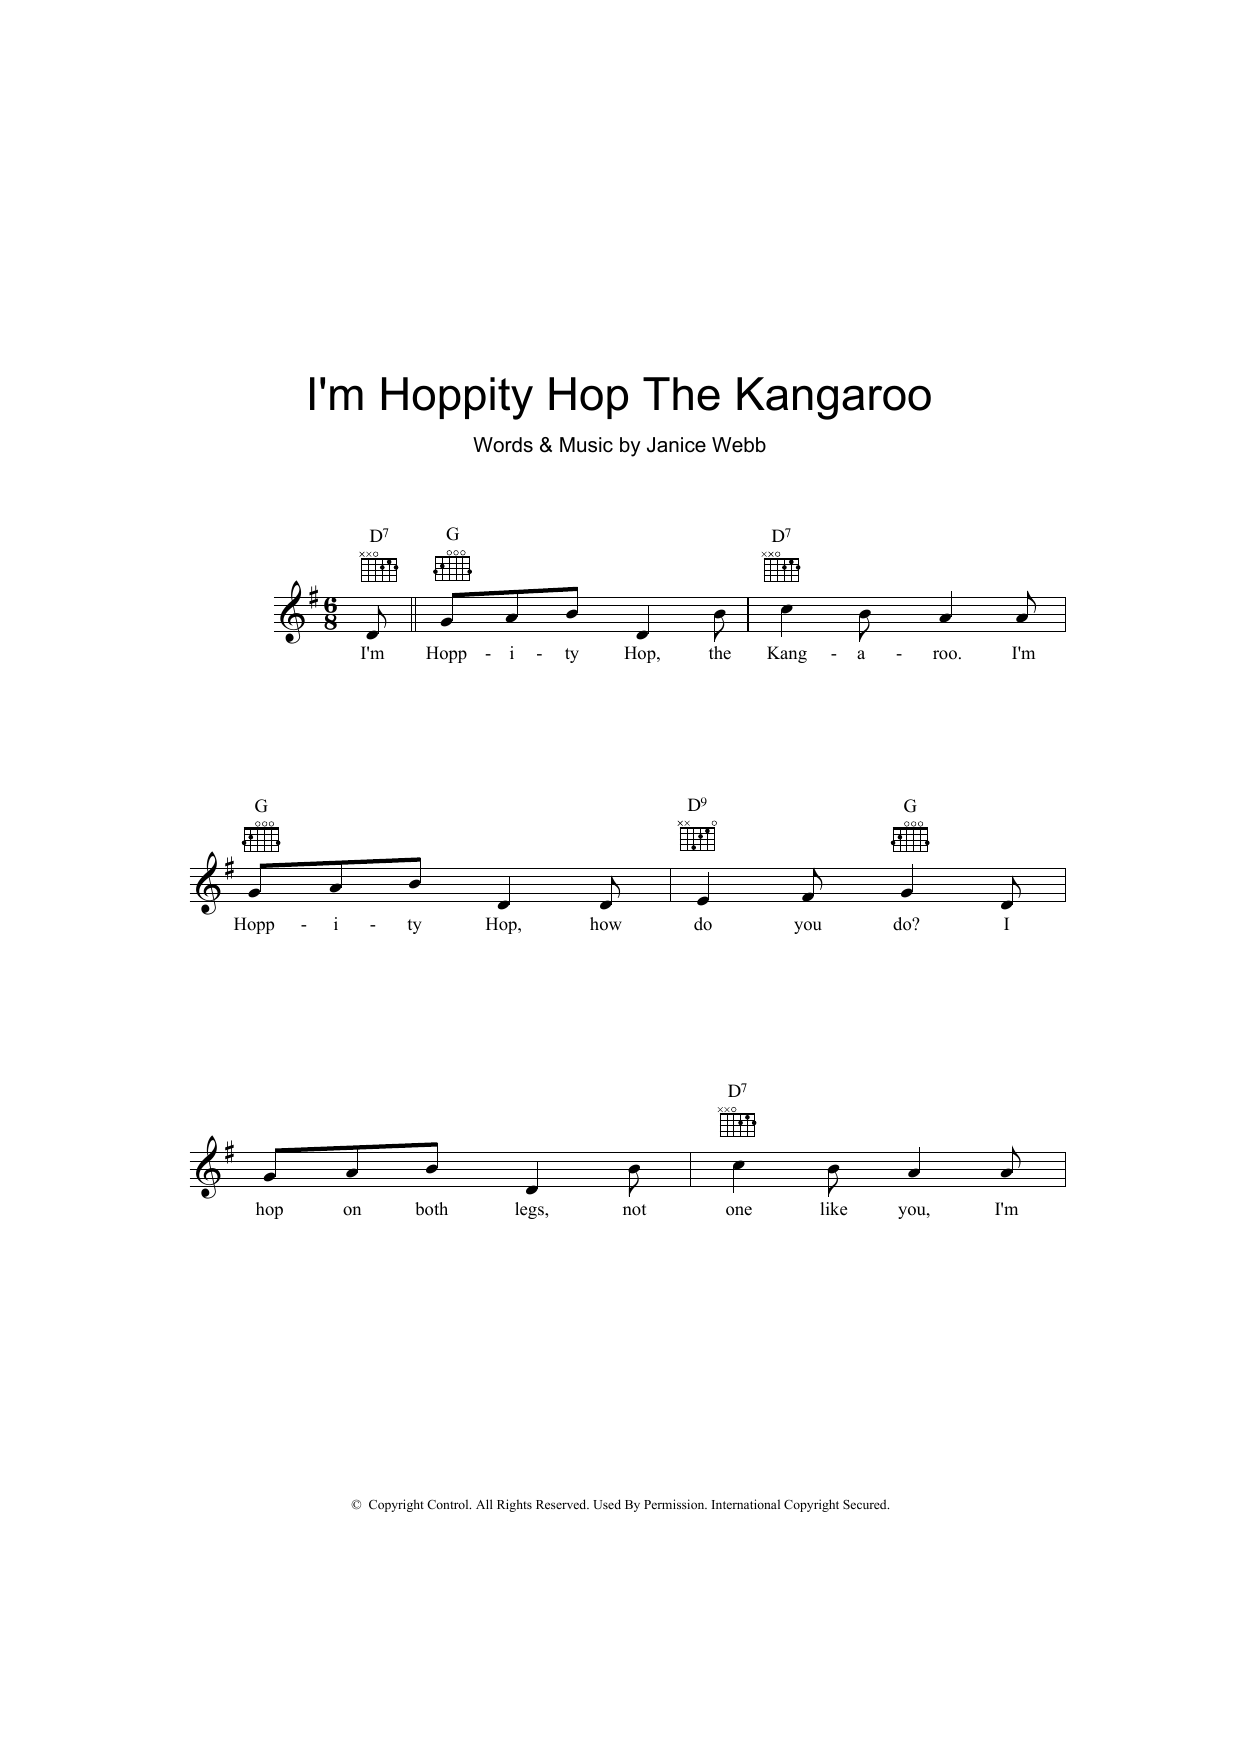 Janice Webb I'm Hoppity Hop The Kangaroo Sheet Music Notes & Chords for Lead Sheet / Fake Book - Download or Print PDF